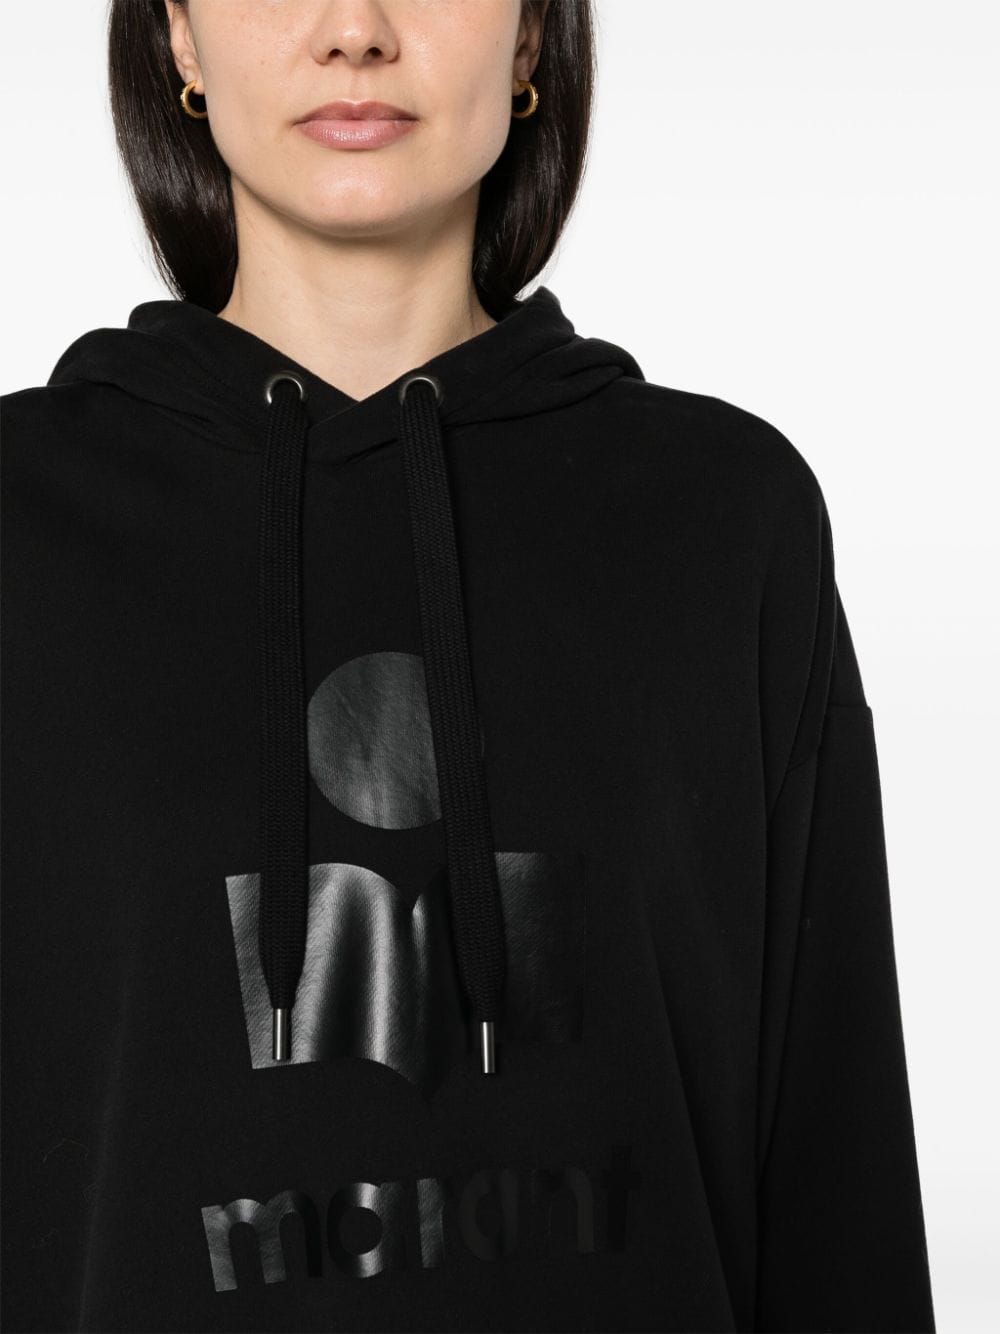 Shanon logo-printed hoodie<BR/><BR/><BR/>